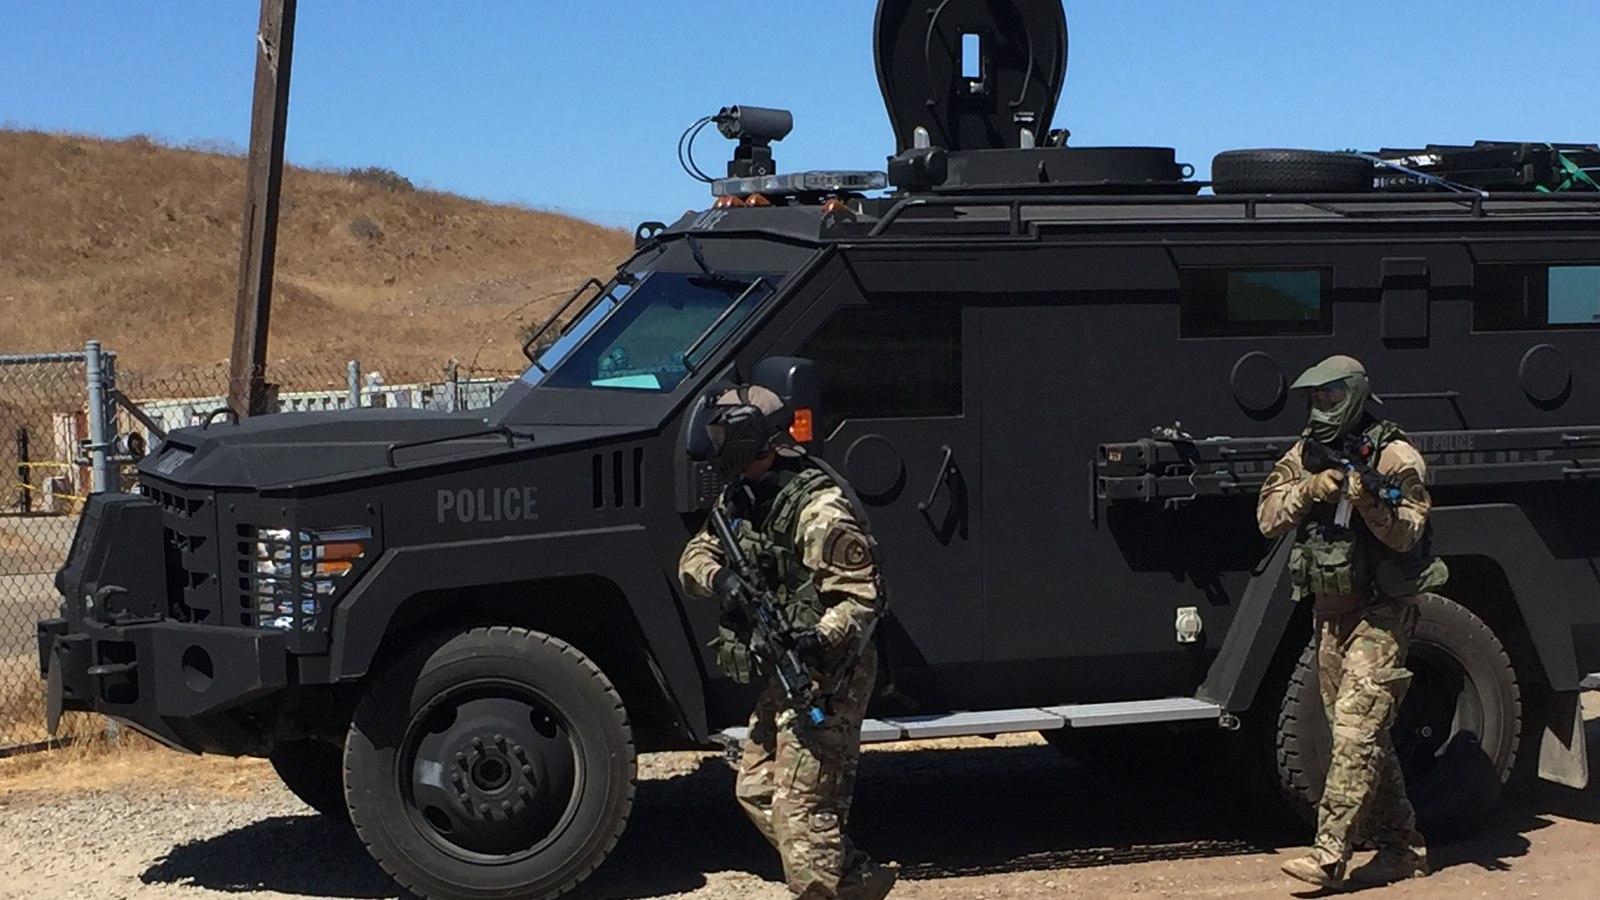 SWAT officer jobs: Tactical team specialty skills